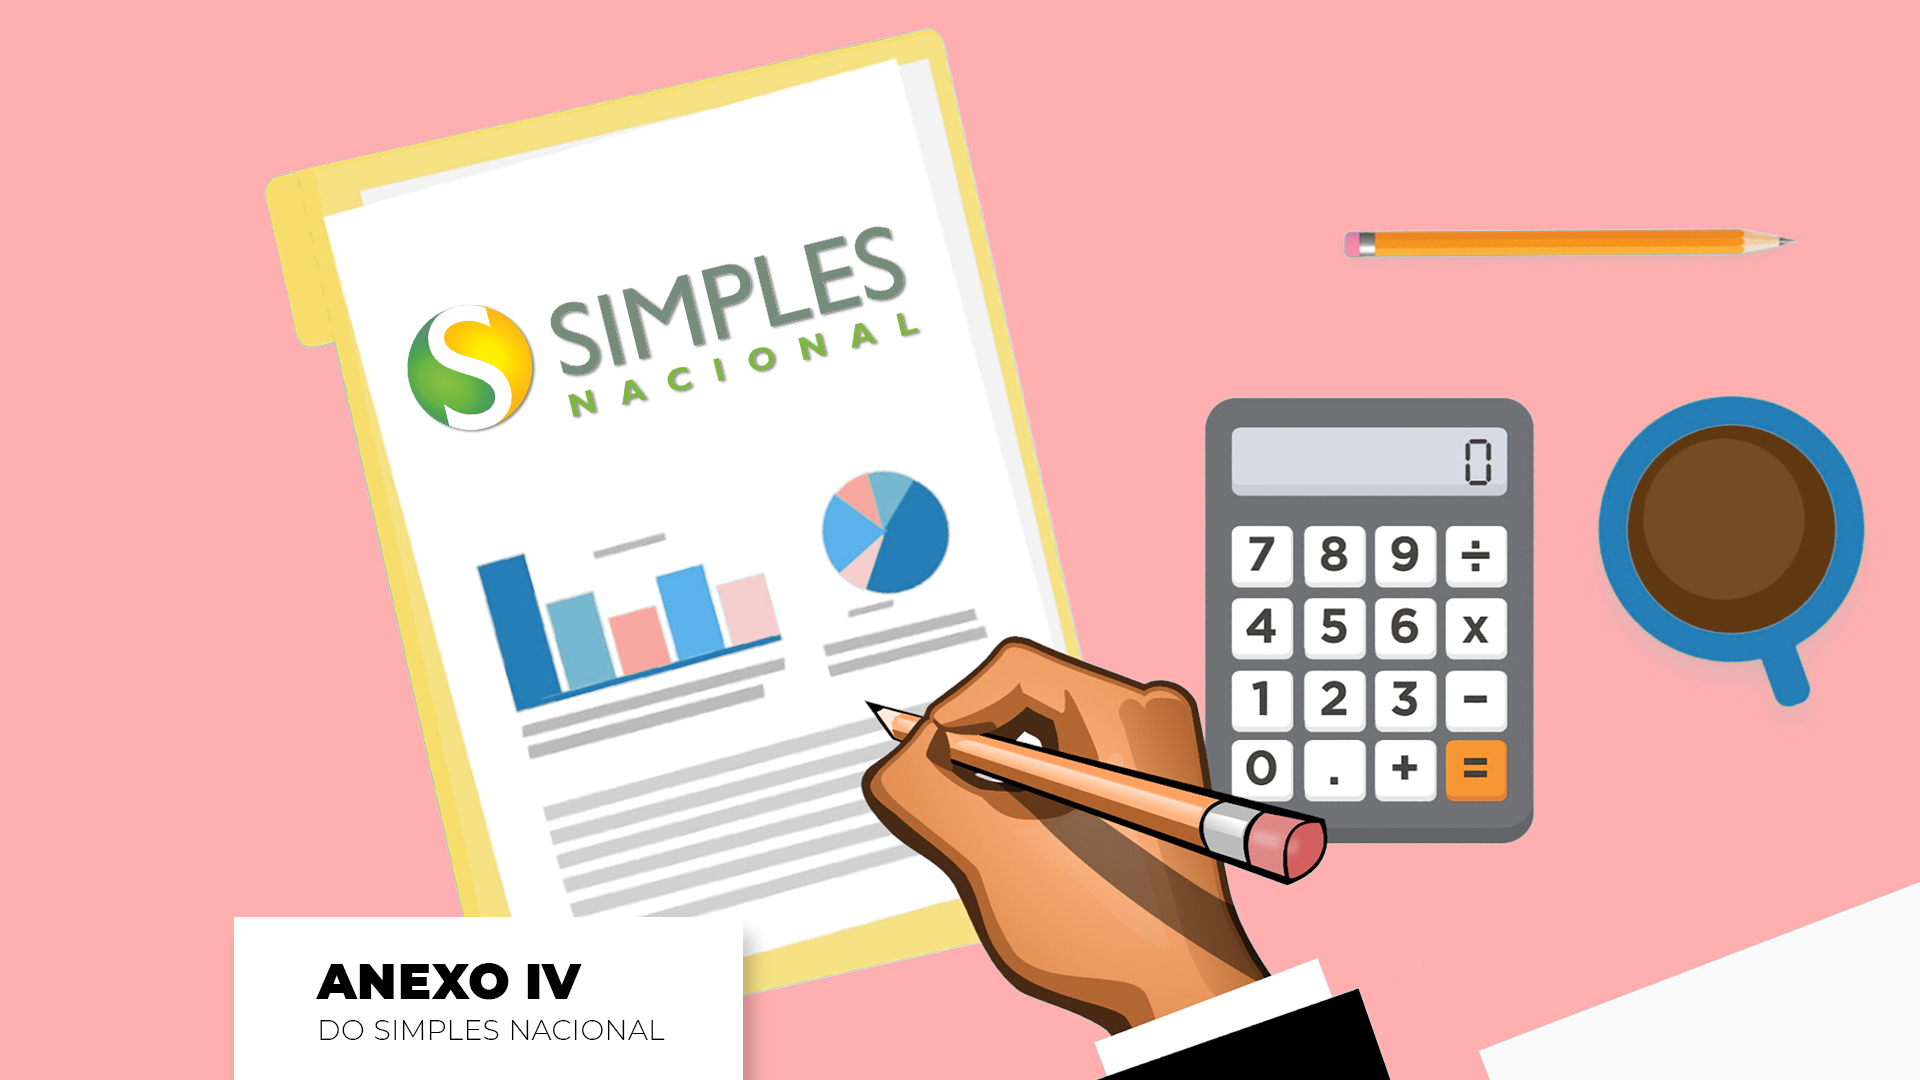 Xaxxx - Anexo IV do simples nacional â€“ Atividades, tabela completa e faixas de  faturamento - Artigos